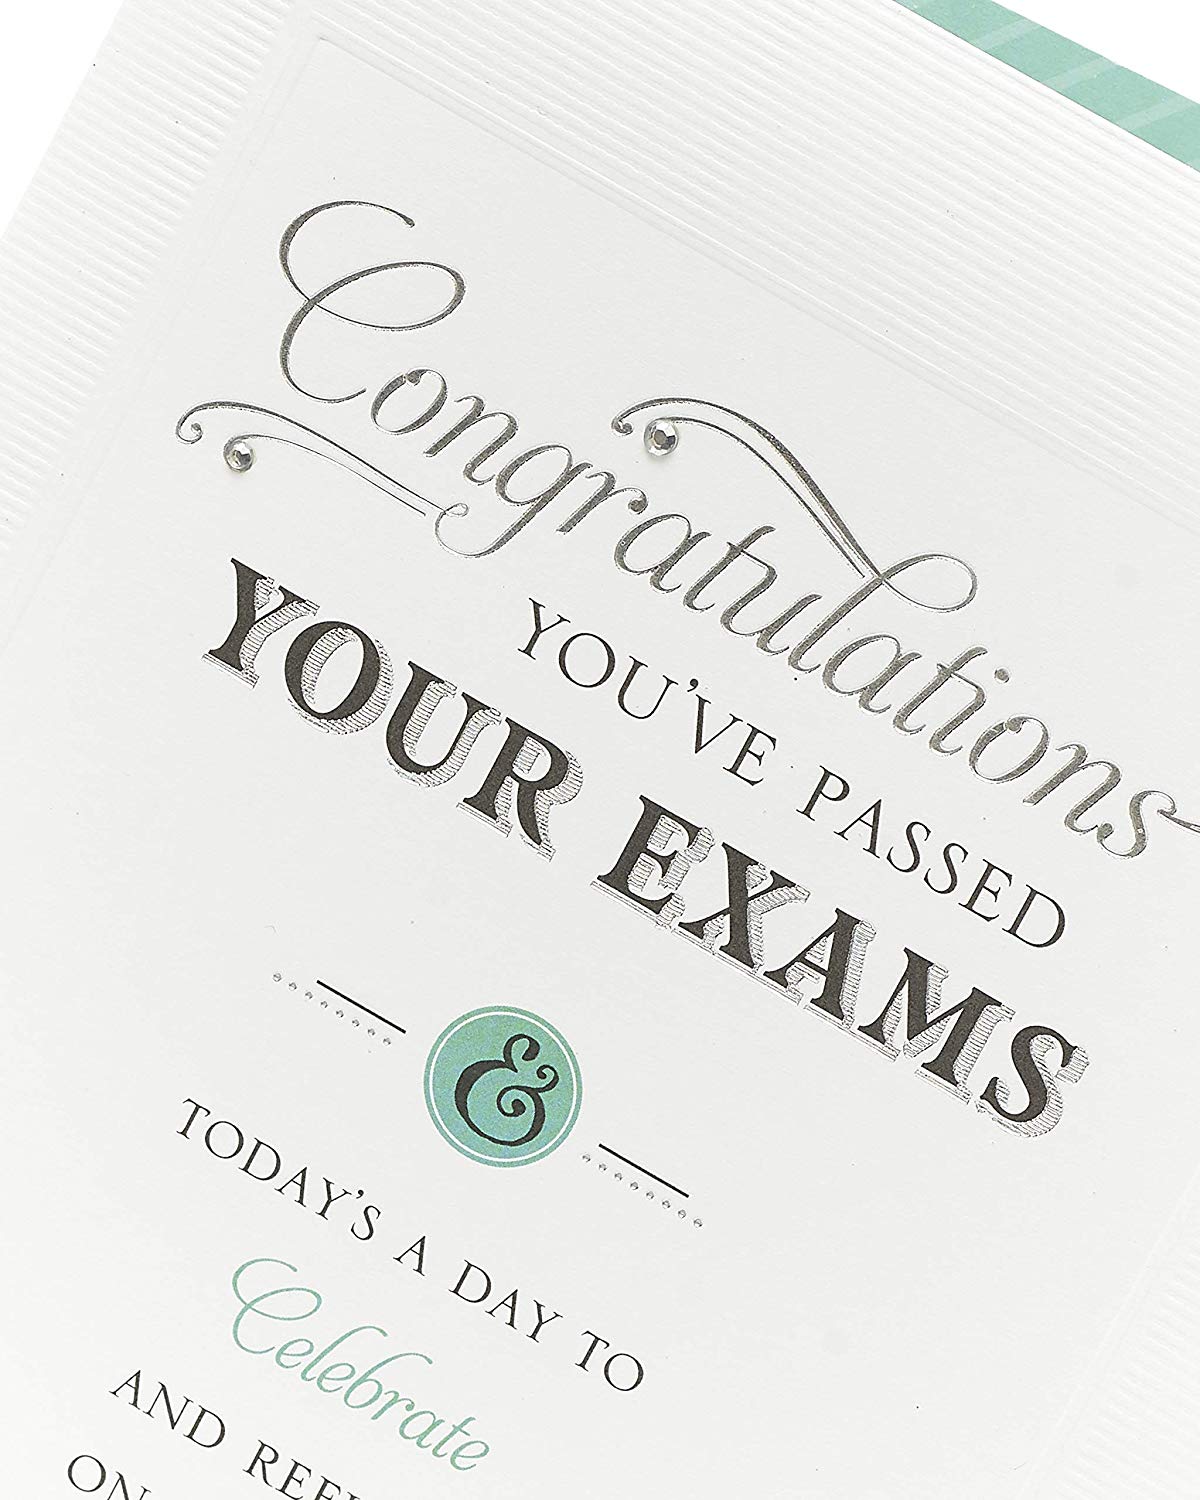 congratulations cards for exam results